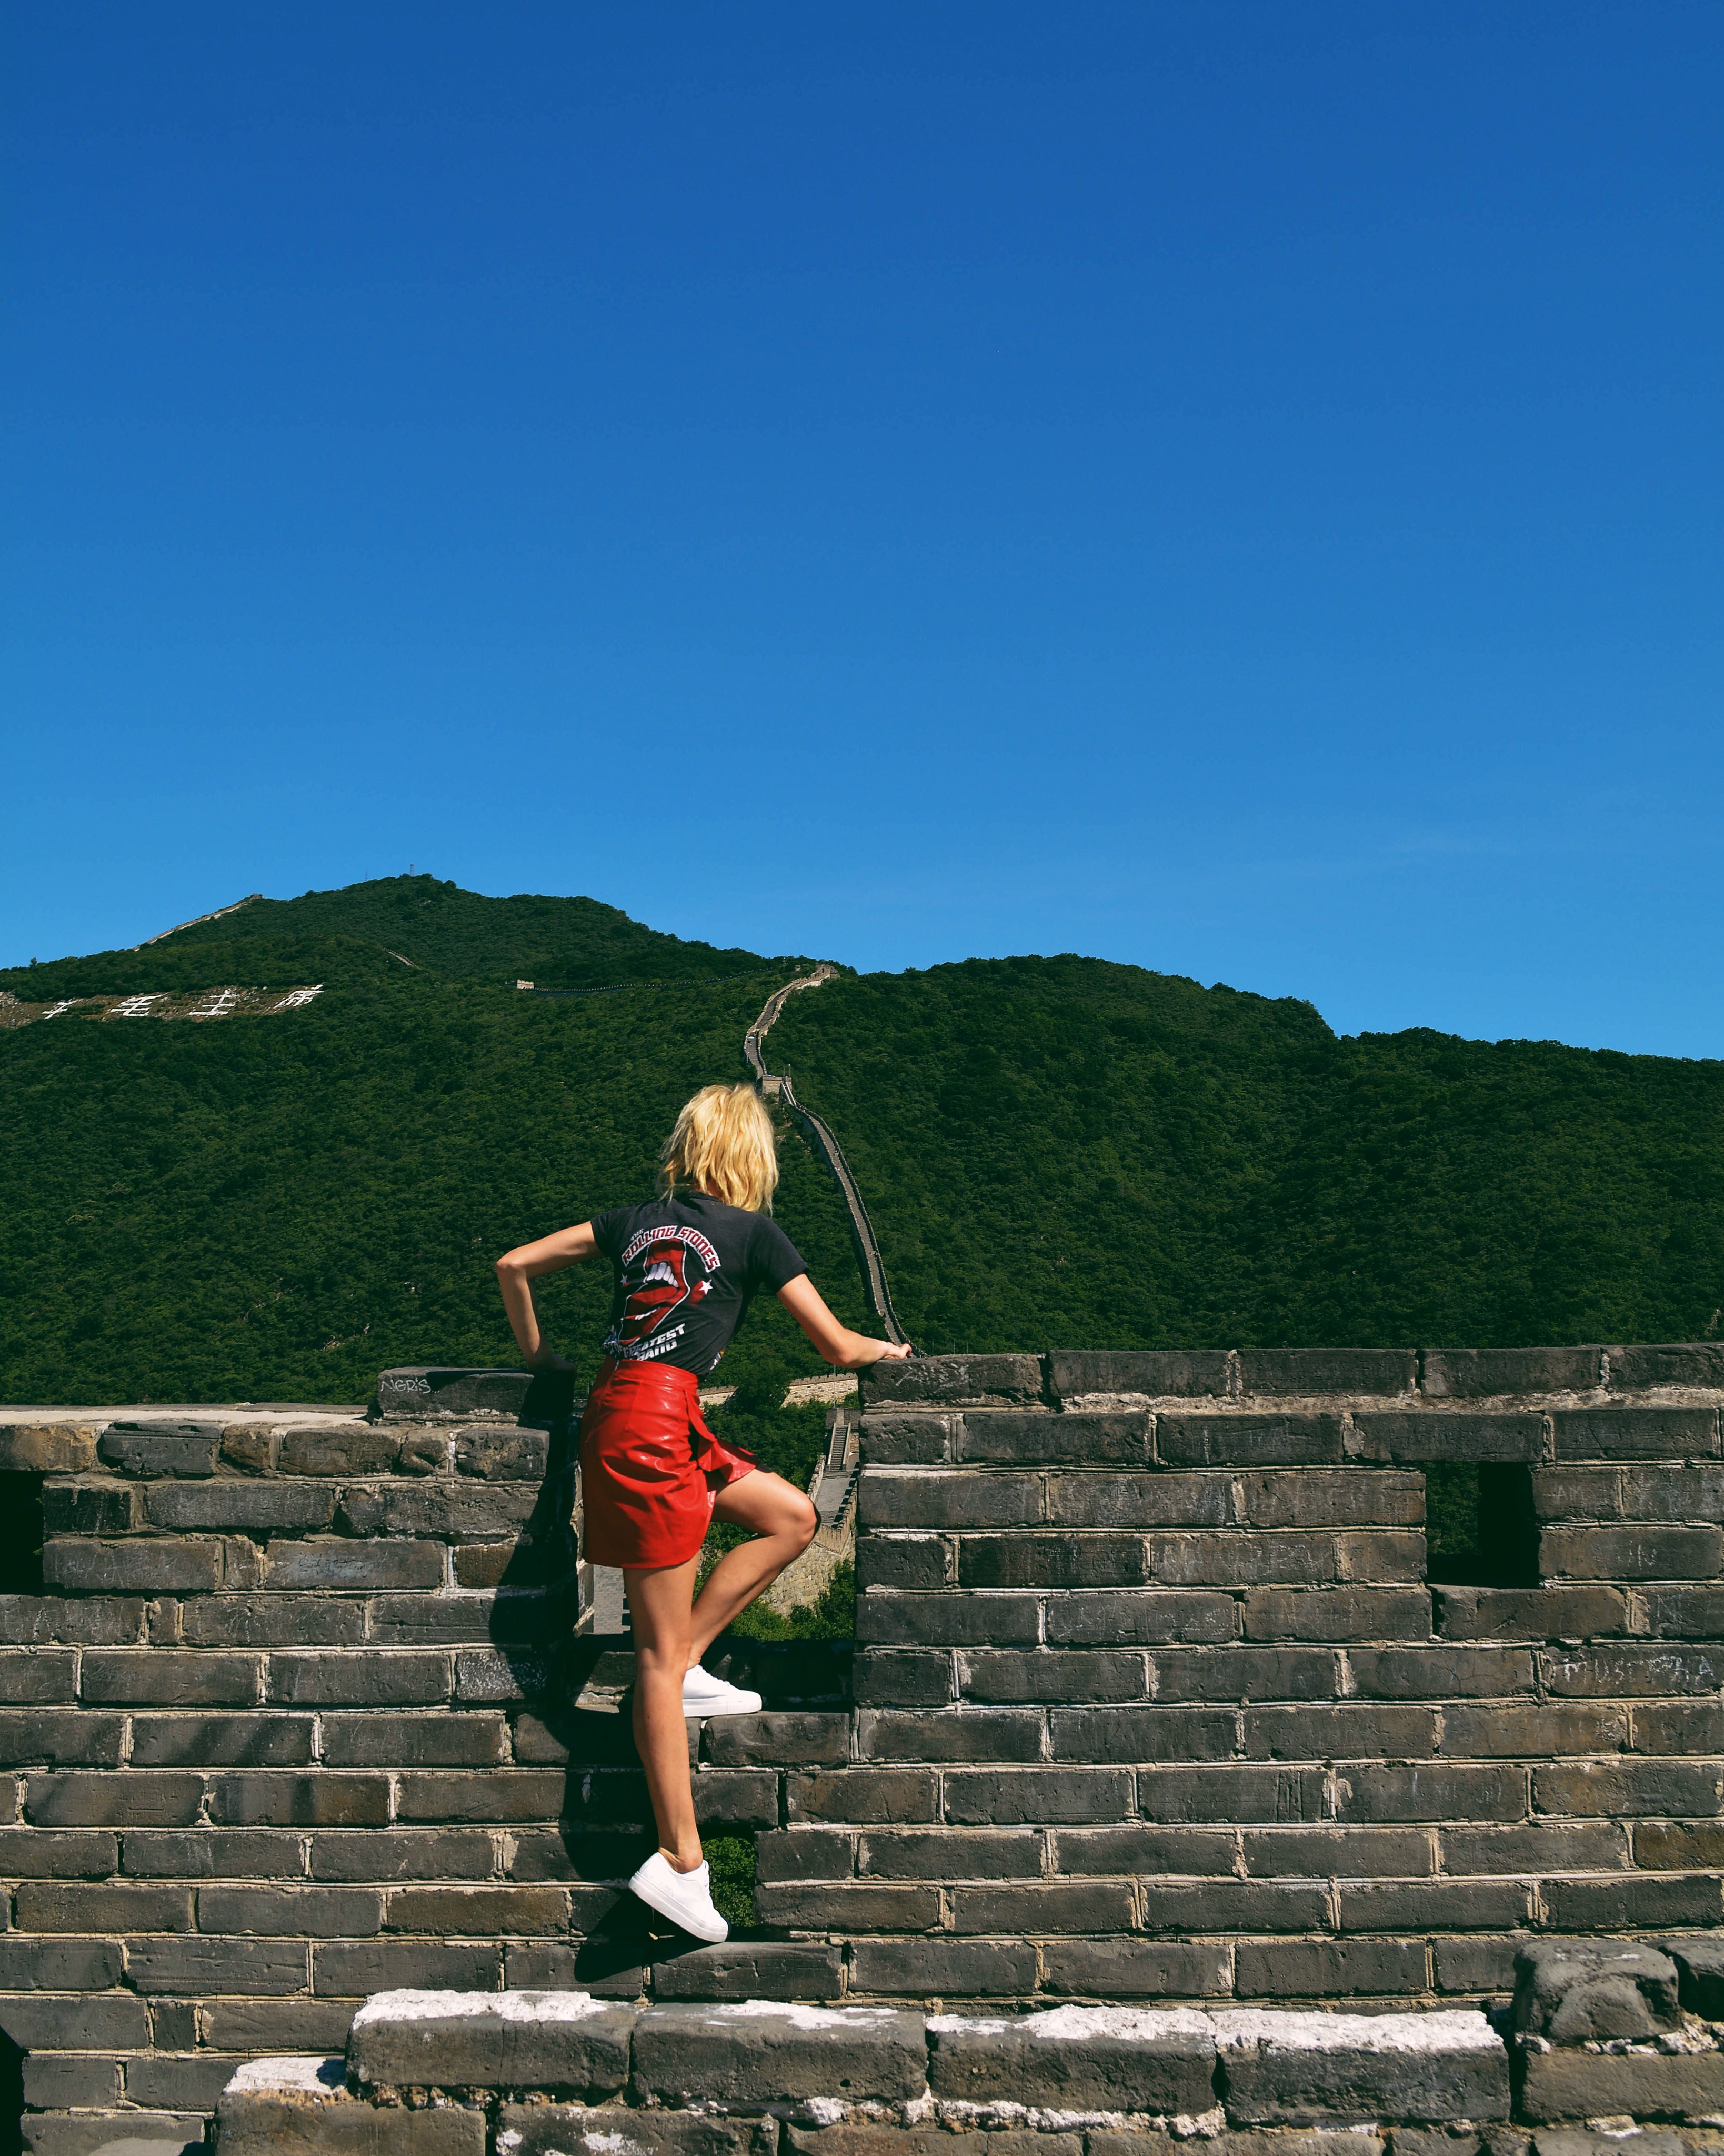 beijing_olympics_nastia_liukin_gymnast_allaround_champion_gold_medal_travel_guide_great_wall_of_china